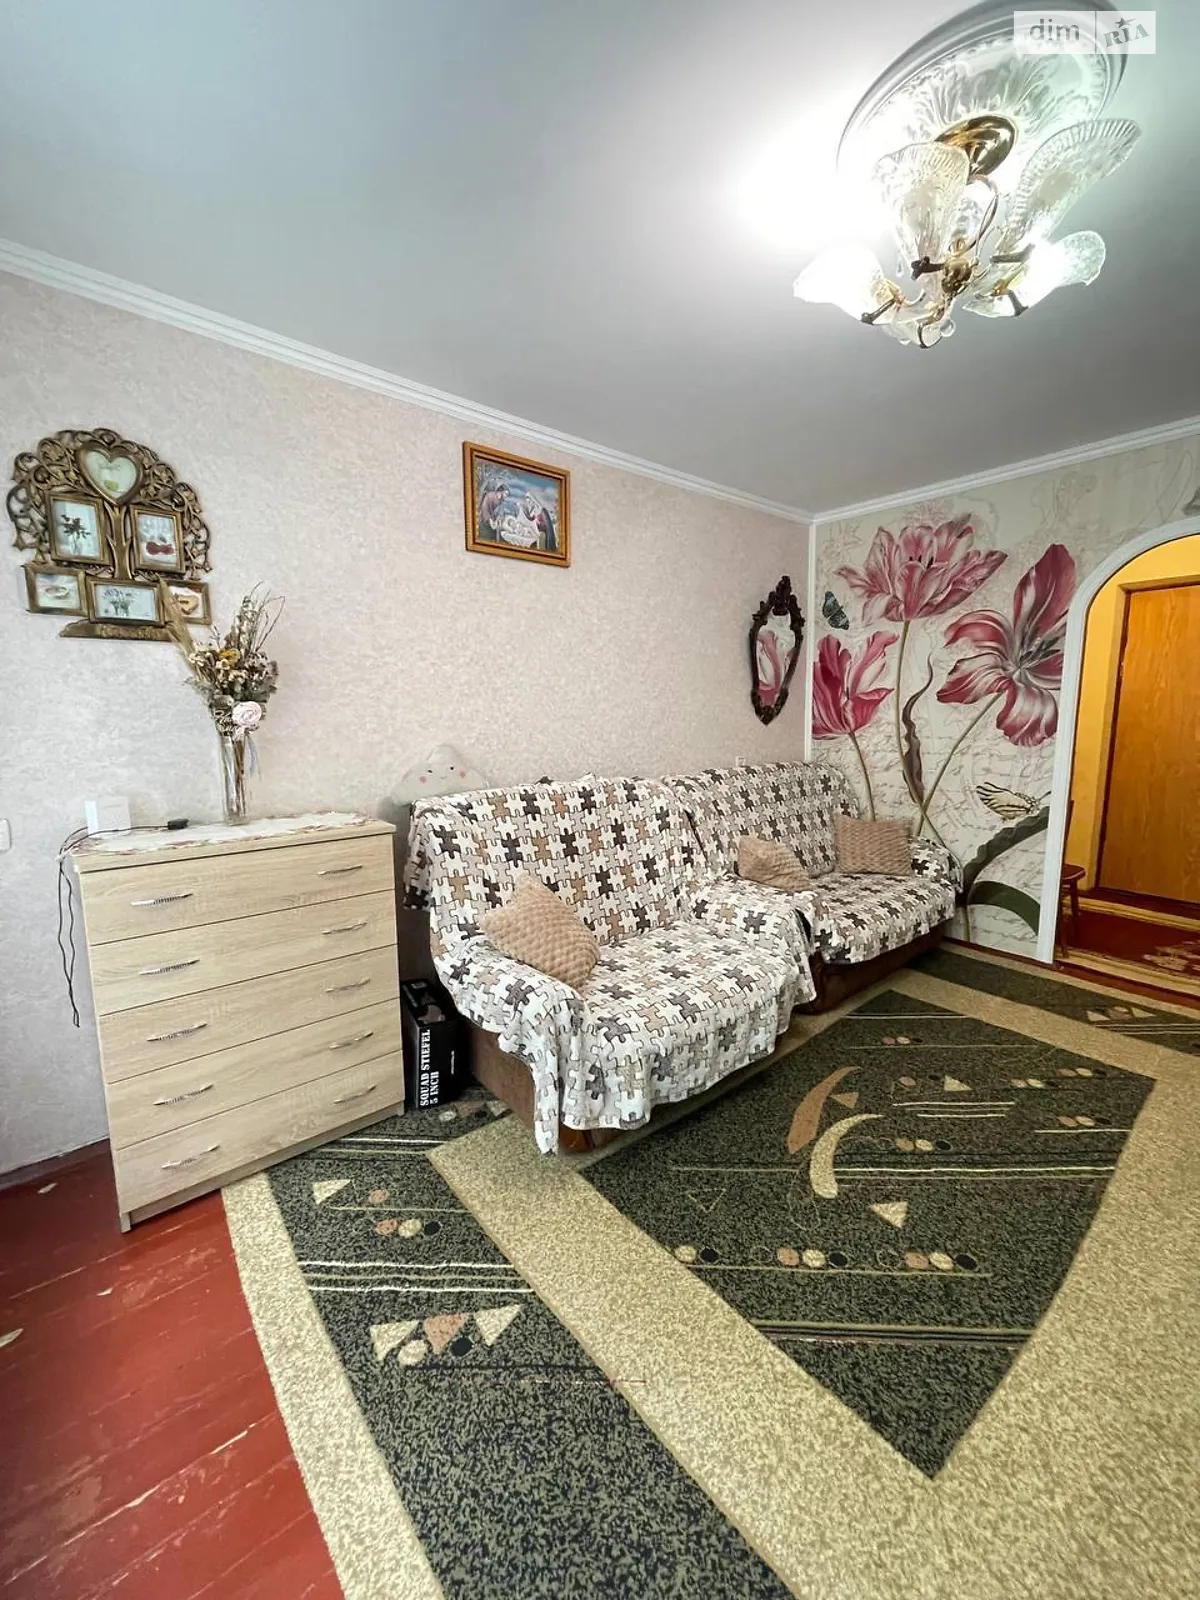 Продается комната 20 кв. м в Тернополе, цена: 12000 $